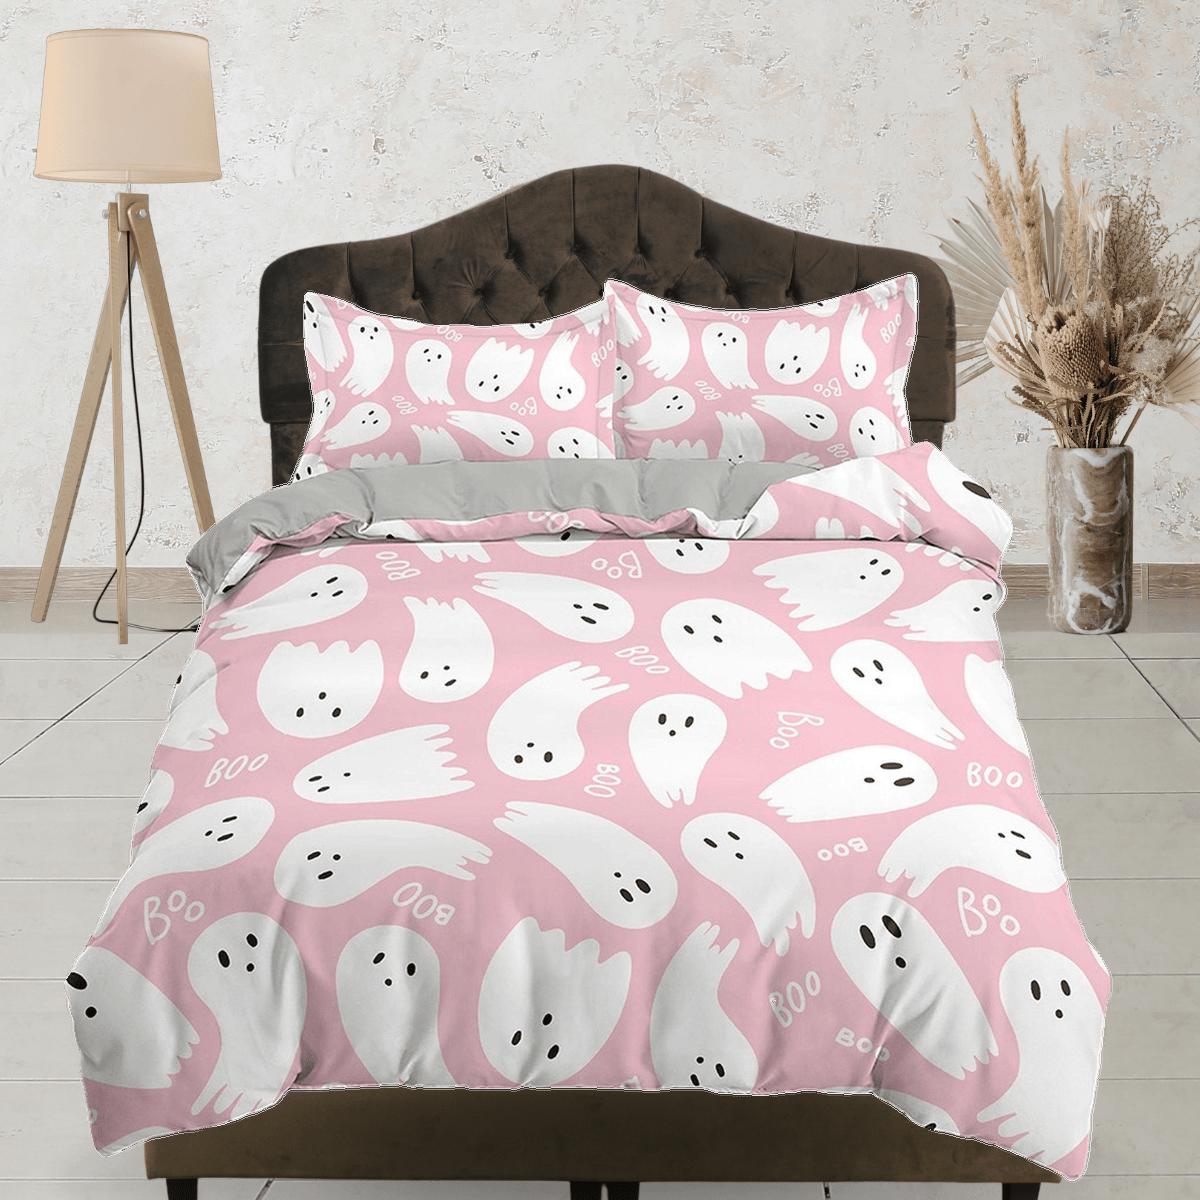 daintyduvet Cute baby ghost pink halloween full size bedding & pillowcase, duvet cover set dorm bedding, halloween decor gift, nursery toddler bedding